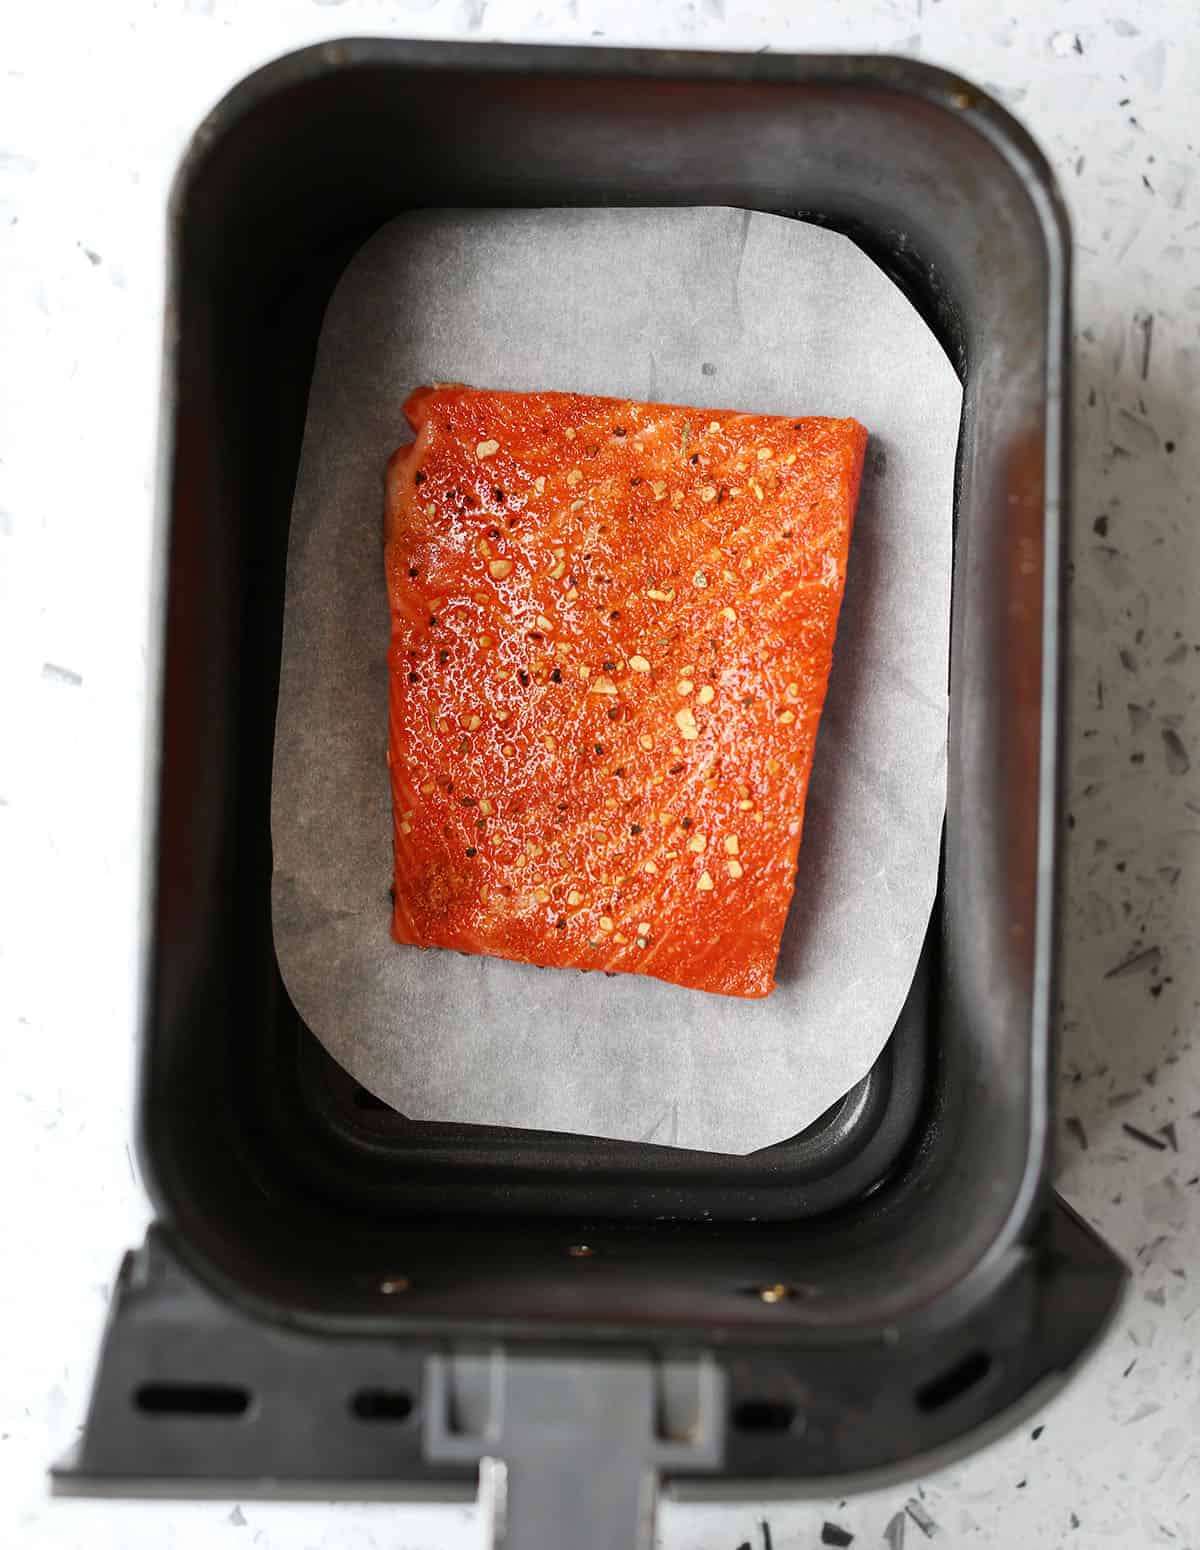 raw salmon in air fryer